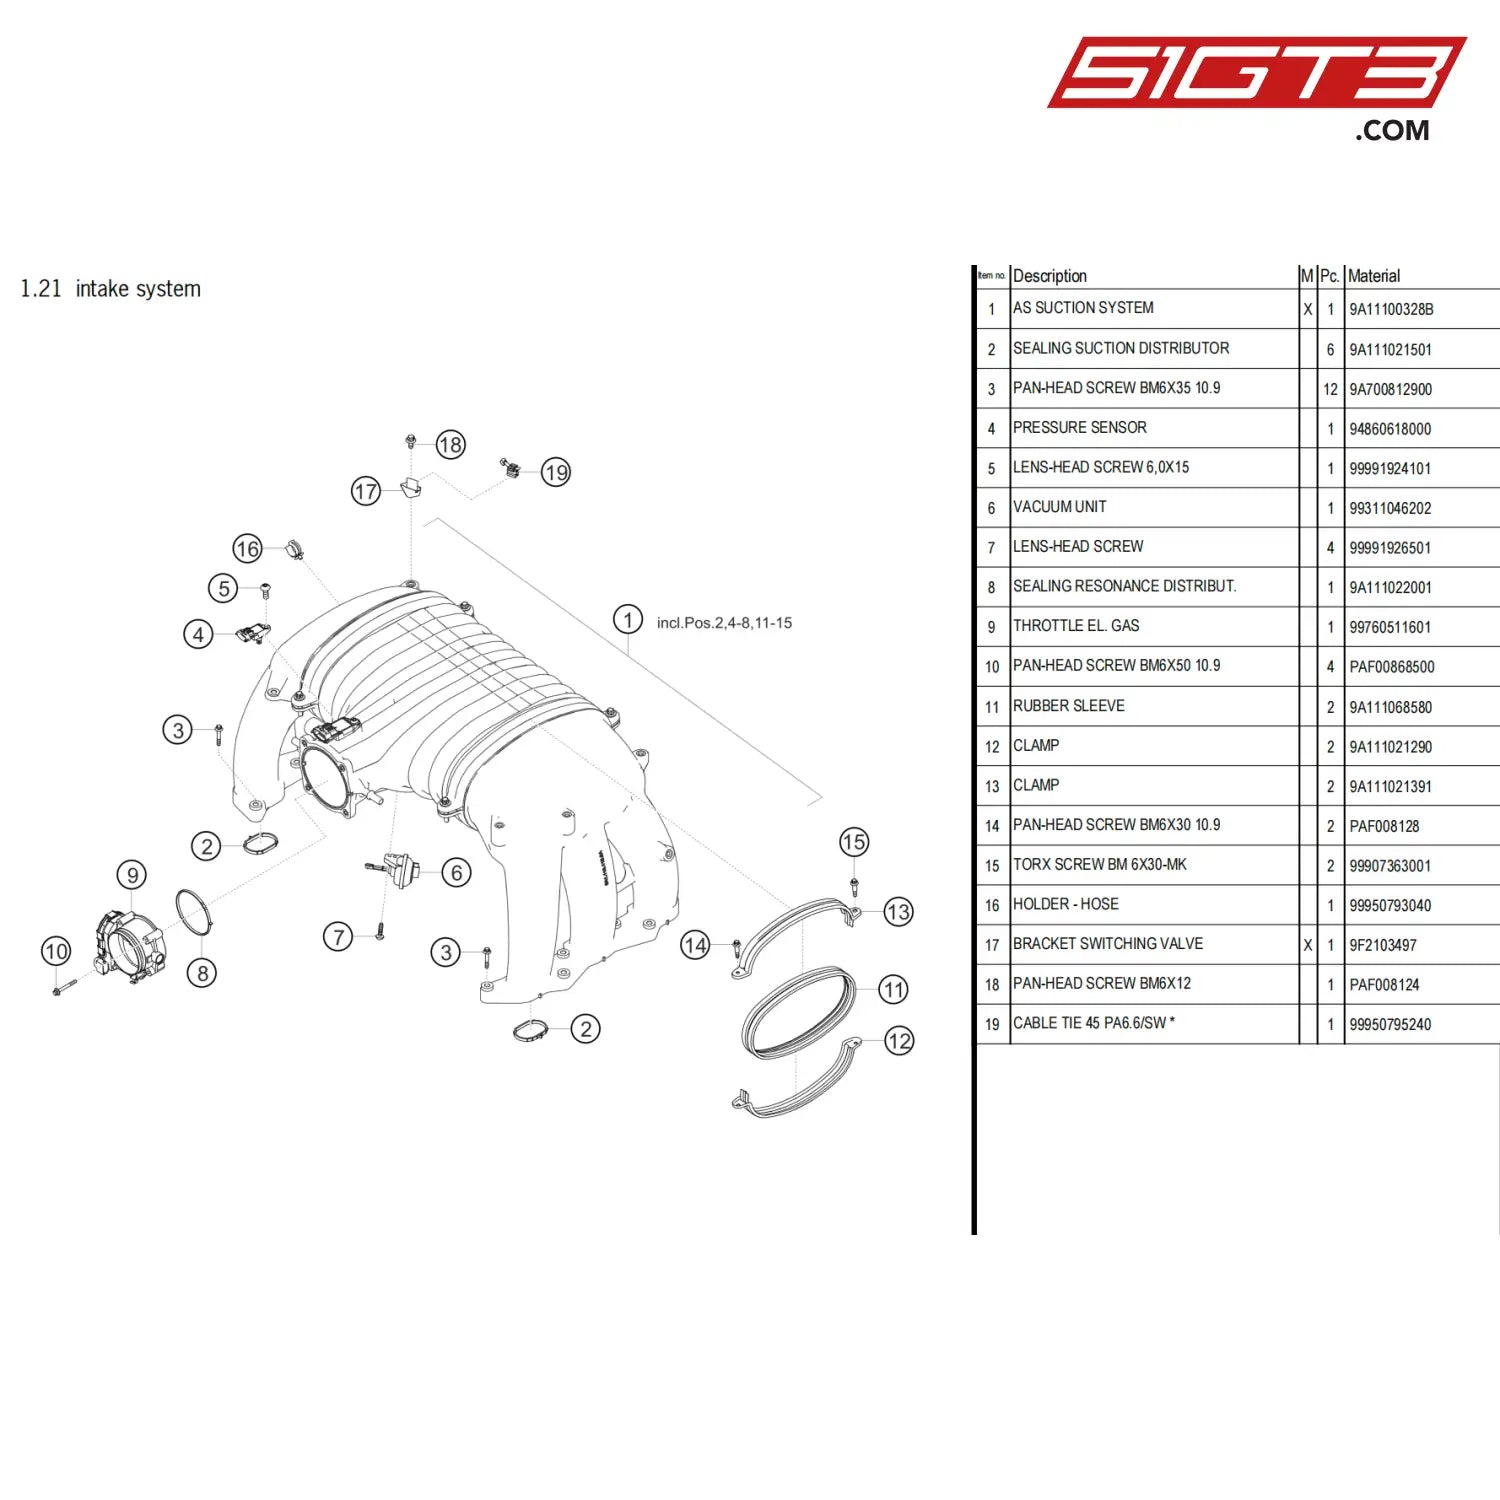 Clamp - 9A111021290 [Porsche 718 Cayman Gt4 Clubsport] Intake System